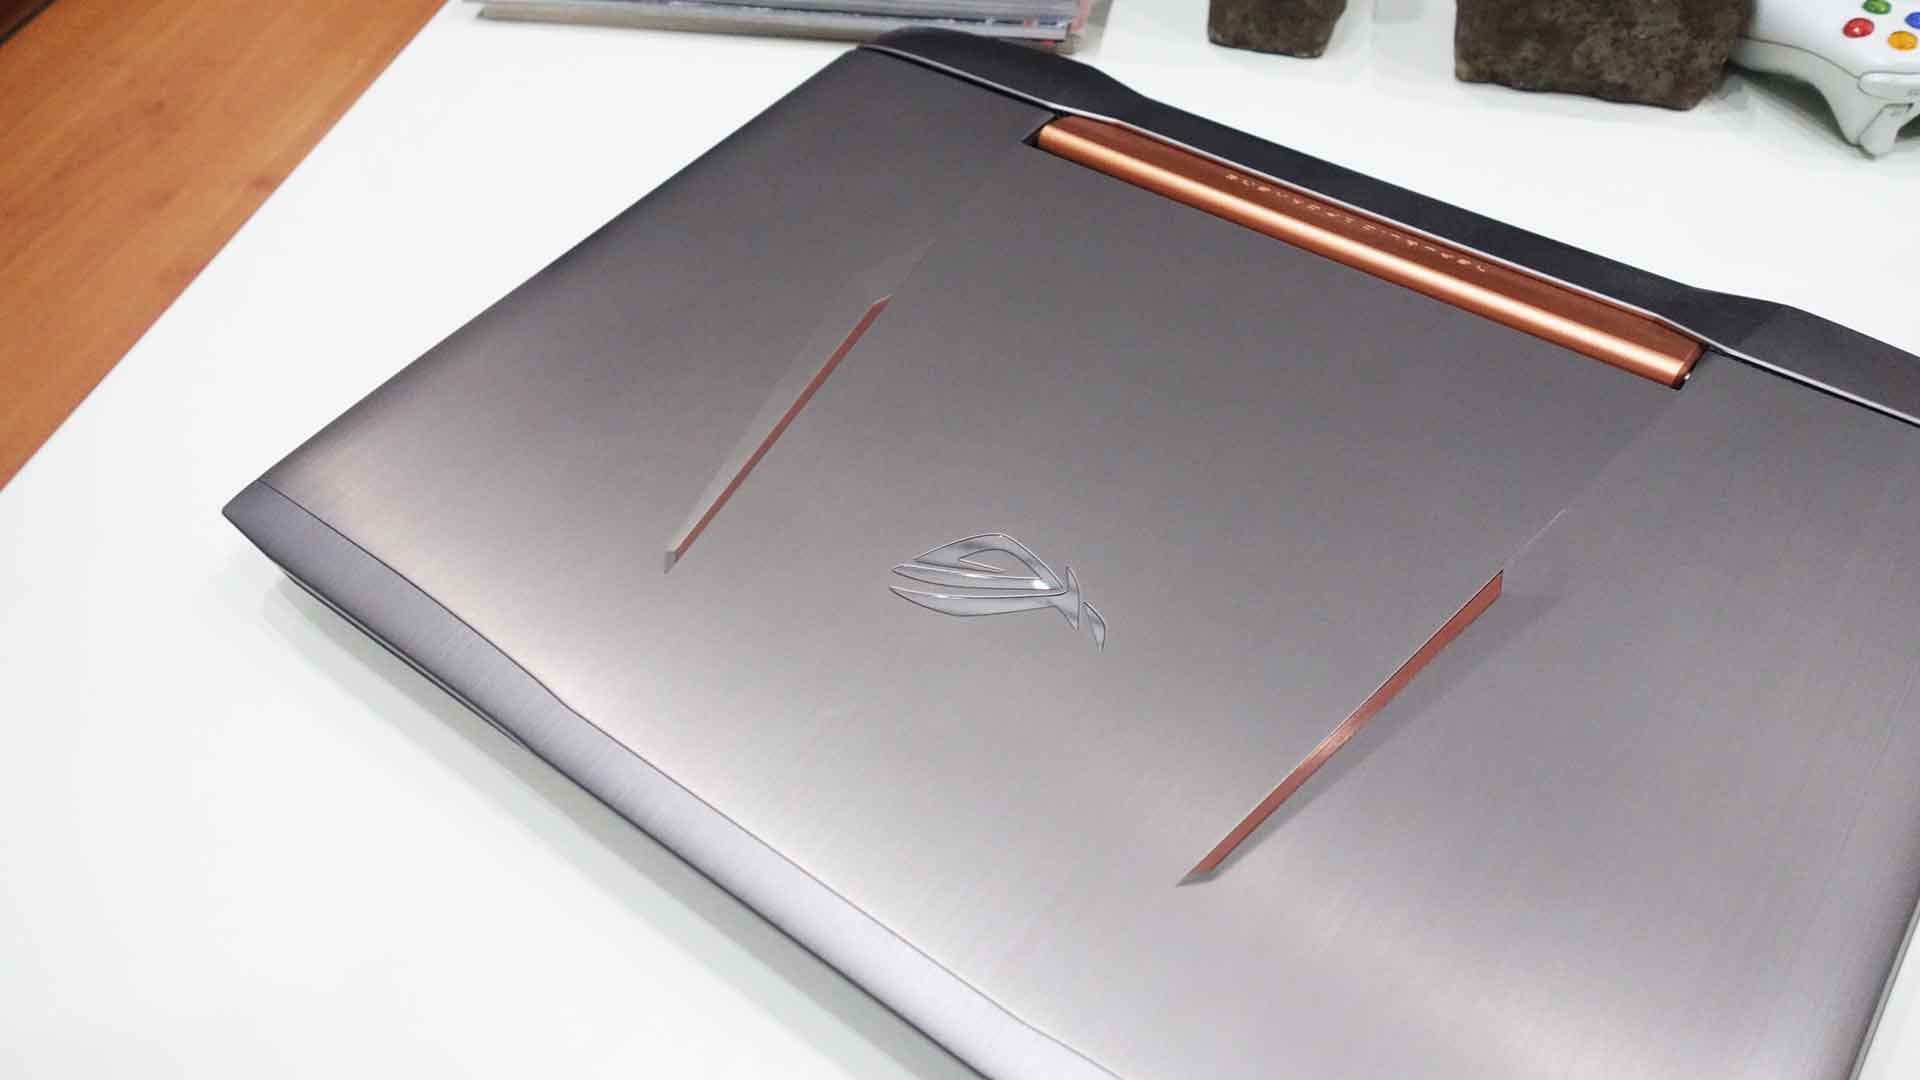 asus-rog-g752-laptop-review-04